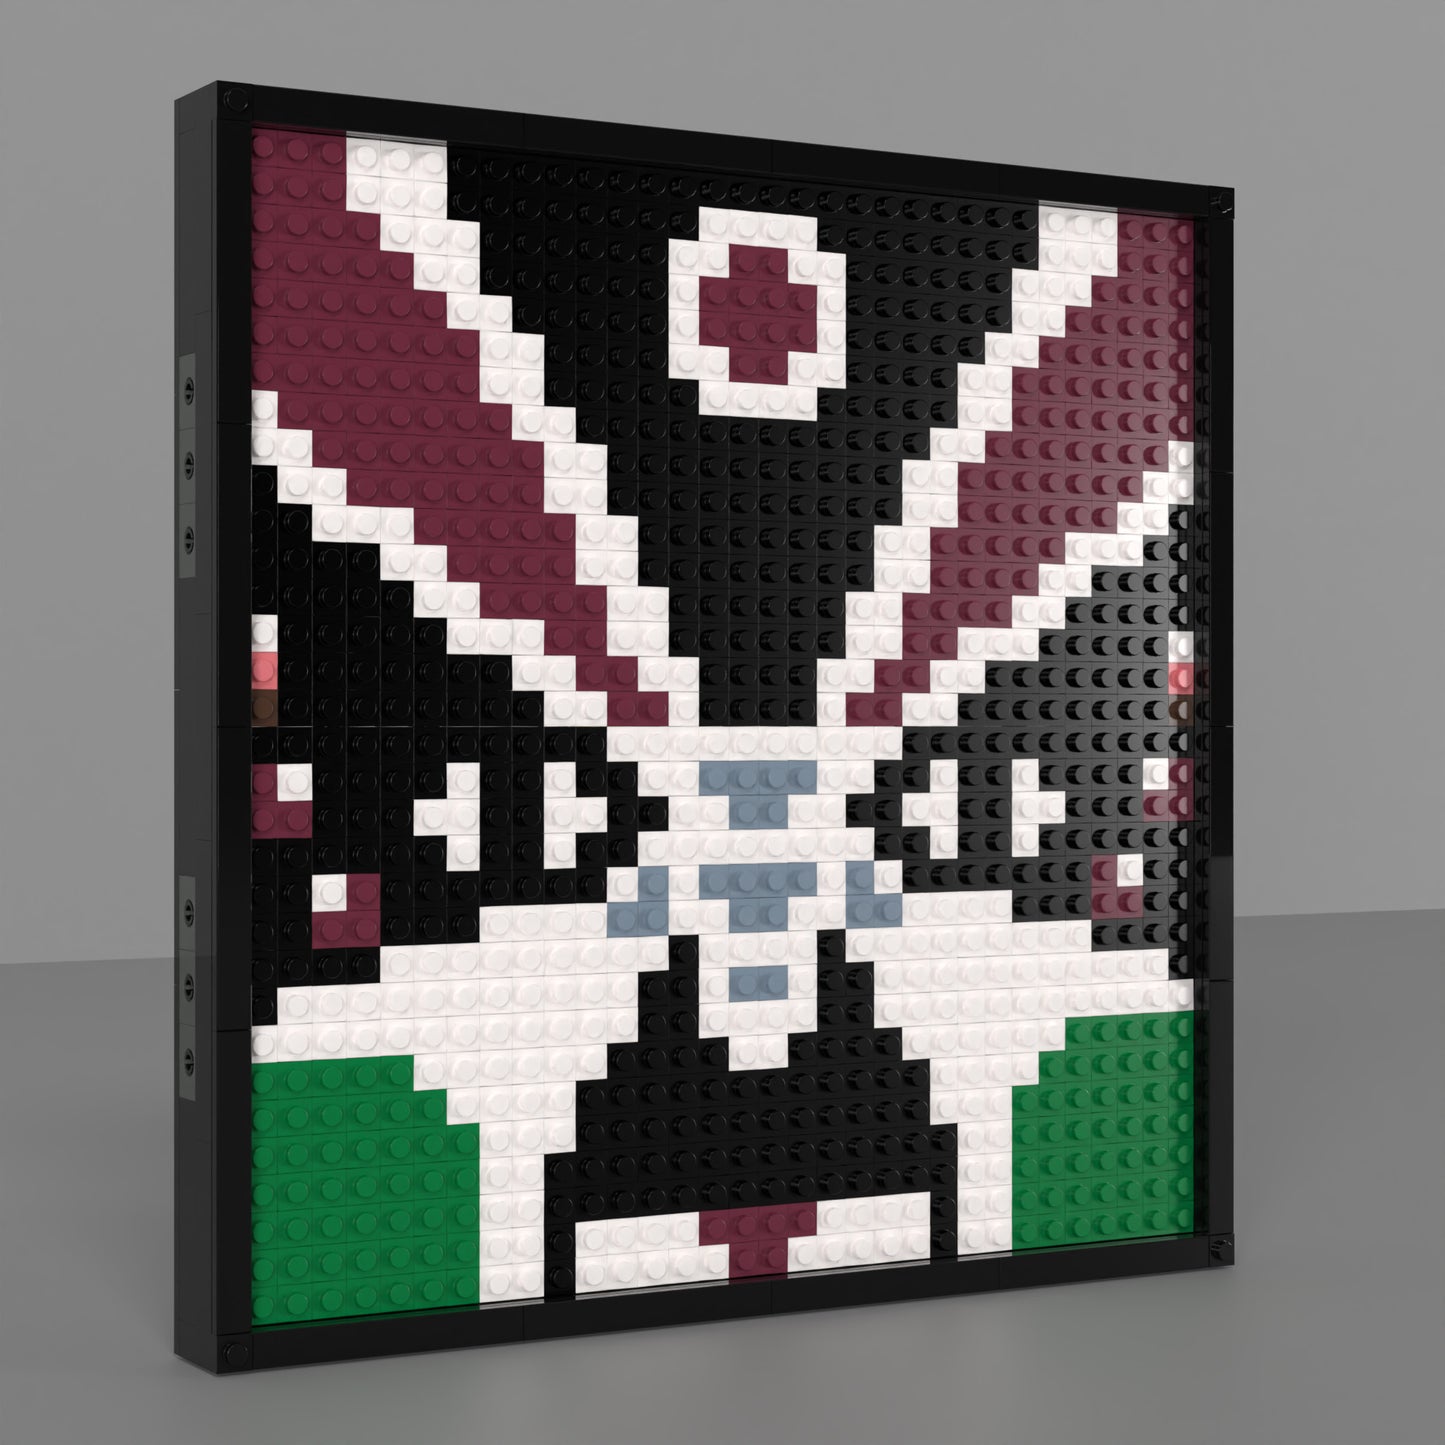 32*32 Compatible Lego Pieces "Face of Peking Opera Jing " Building Brick Pixel Art